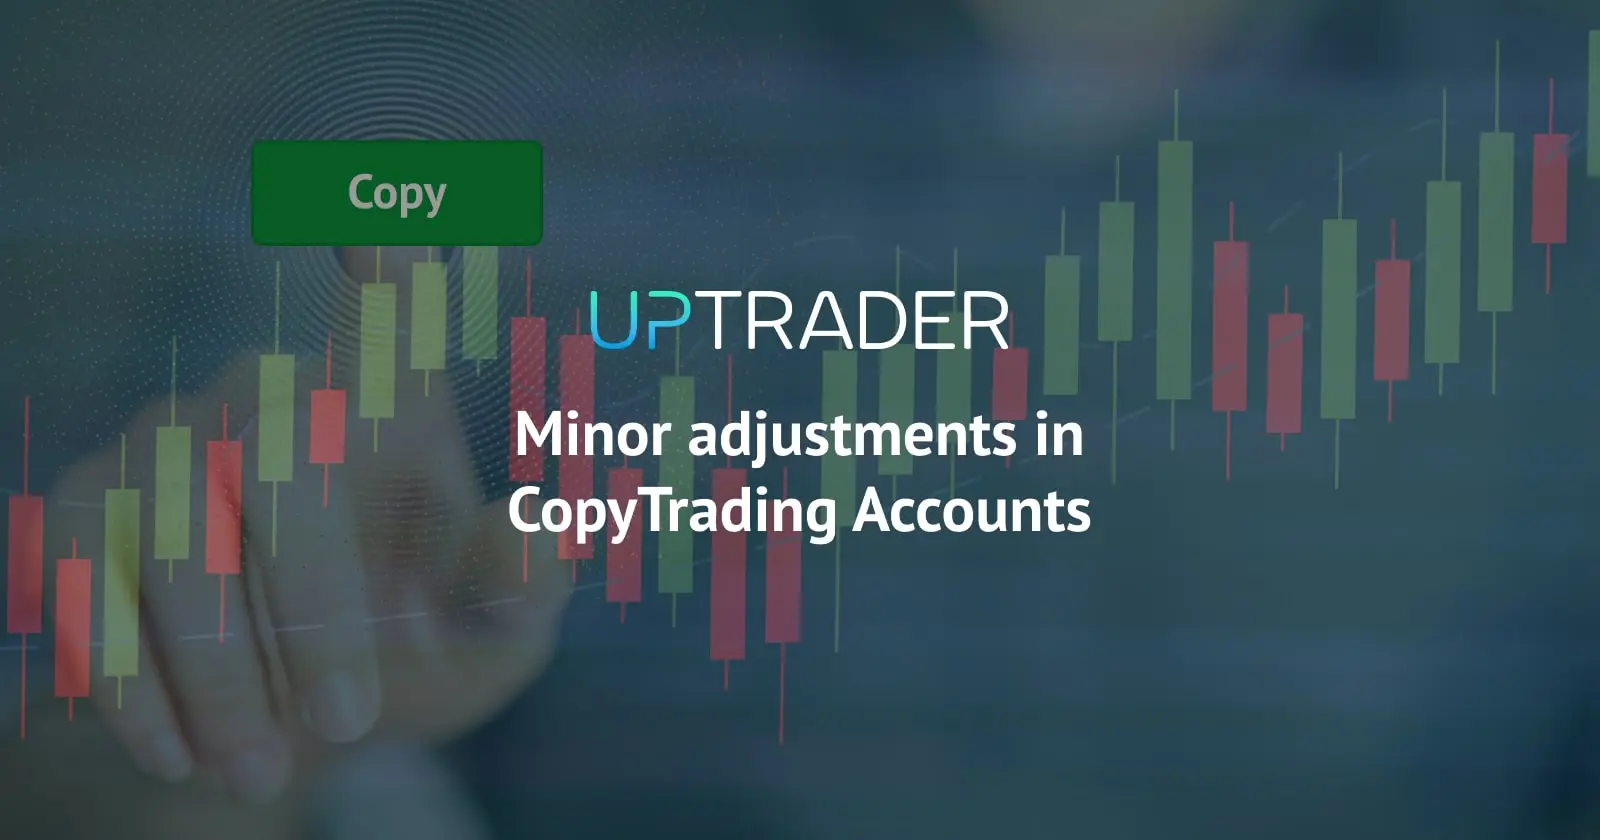 Minor adjustments in CopyTrading Accounts